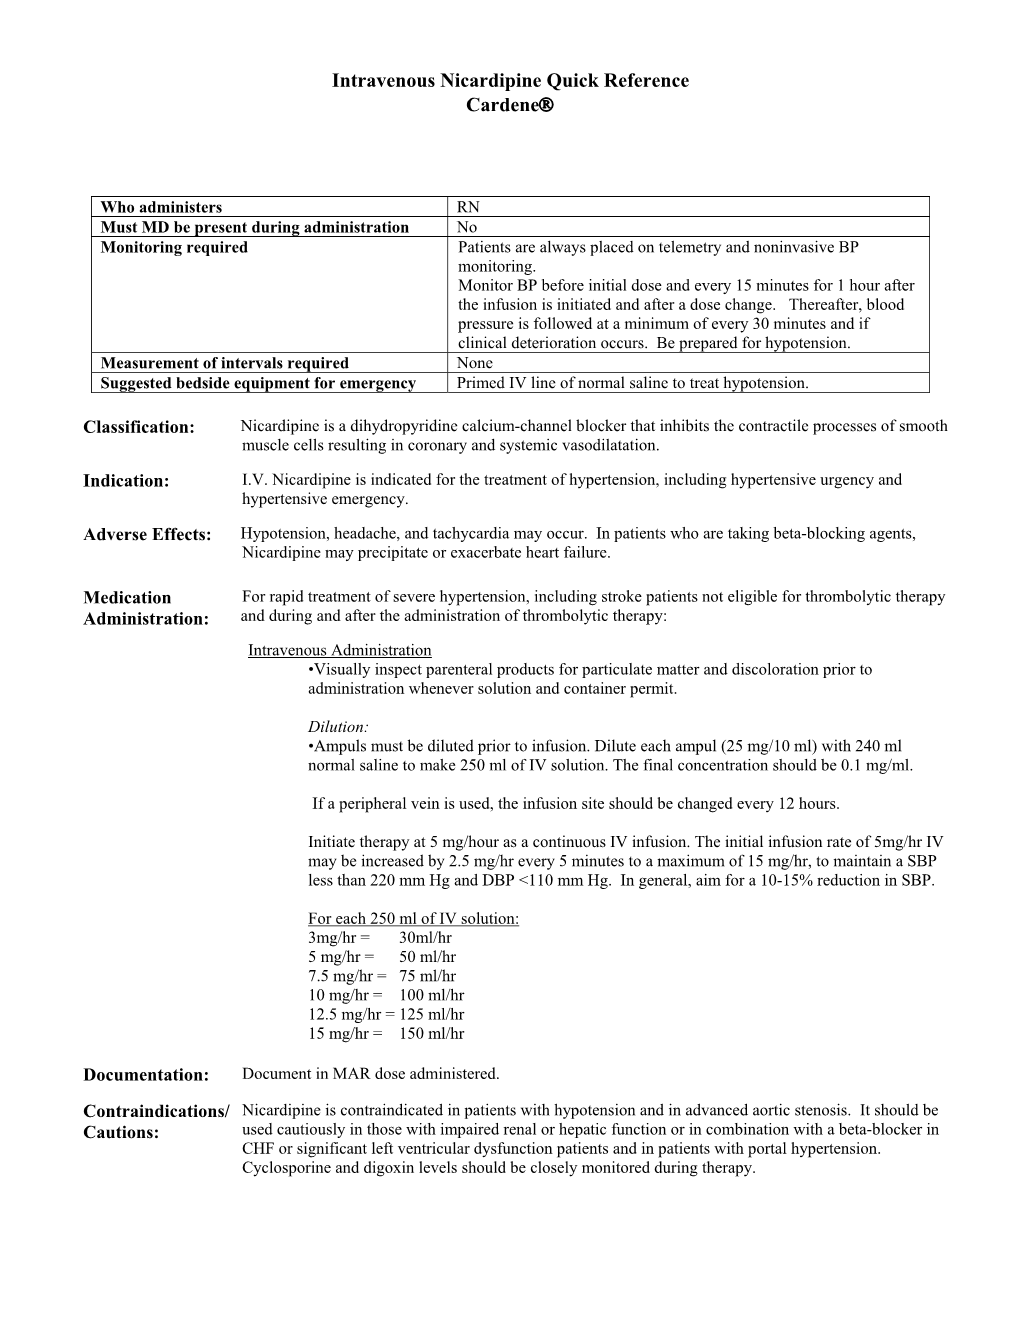 Intravenous Nicardipine Quick Reference Cardene® (PDF)